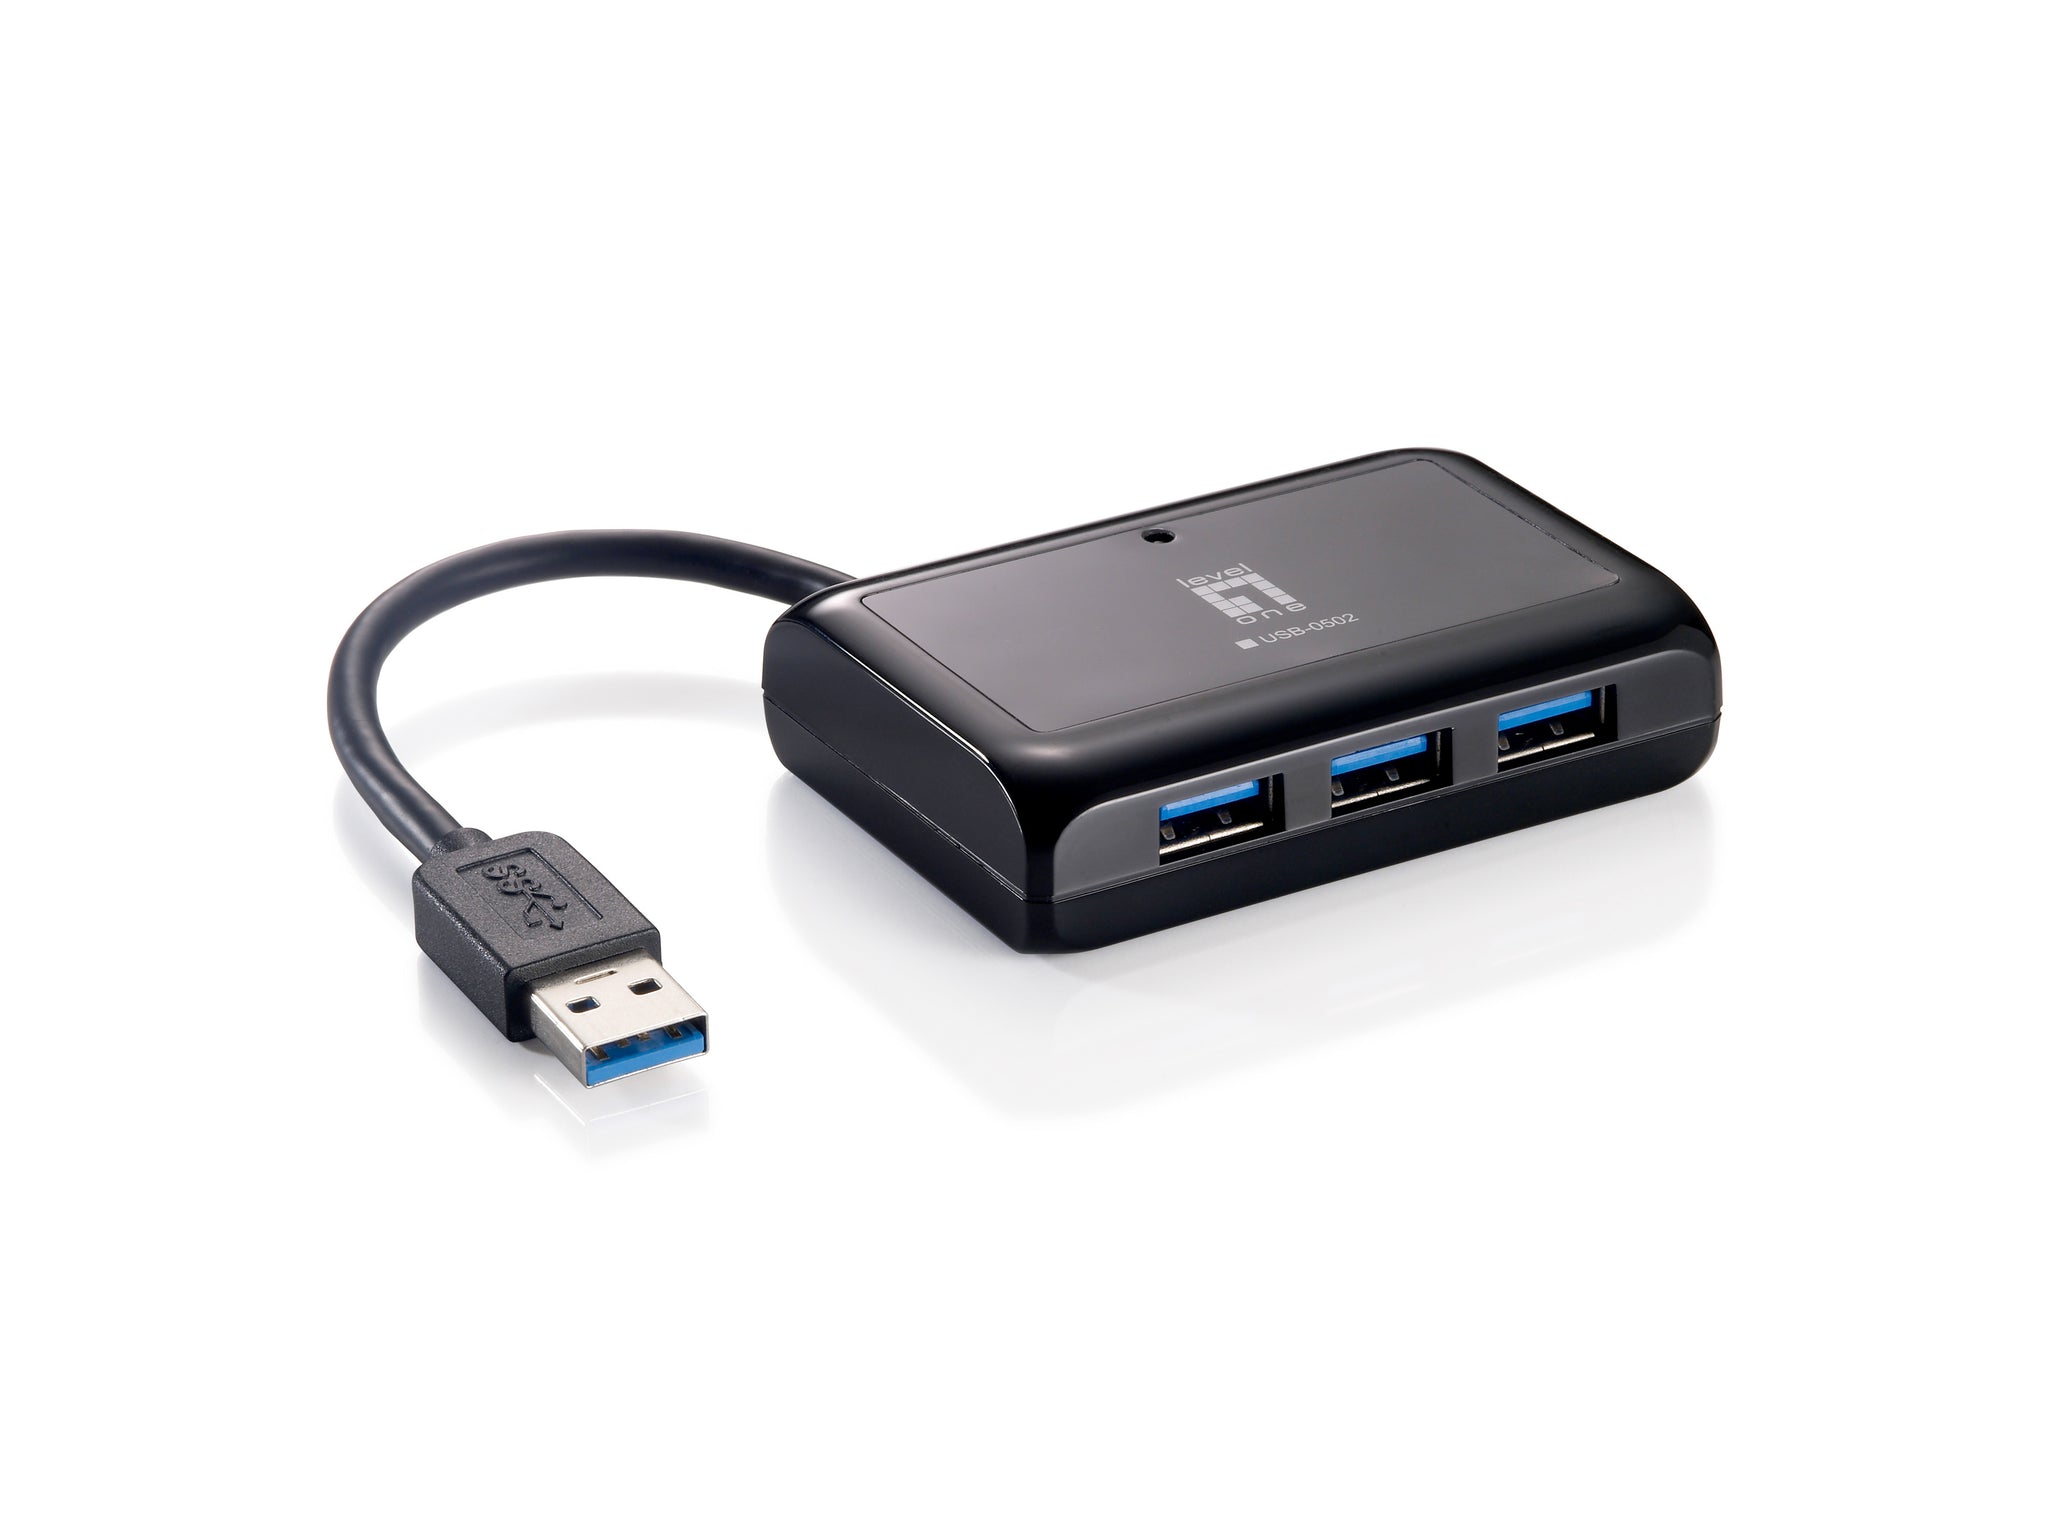 USB-0502 Gigabit USB Network Adapter, USB Hub